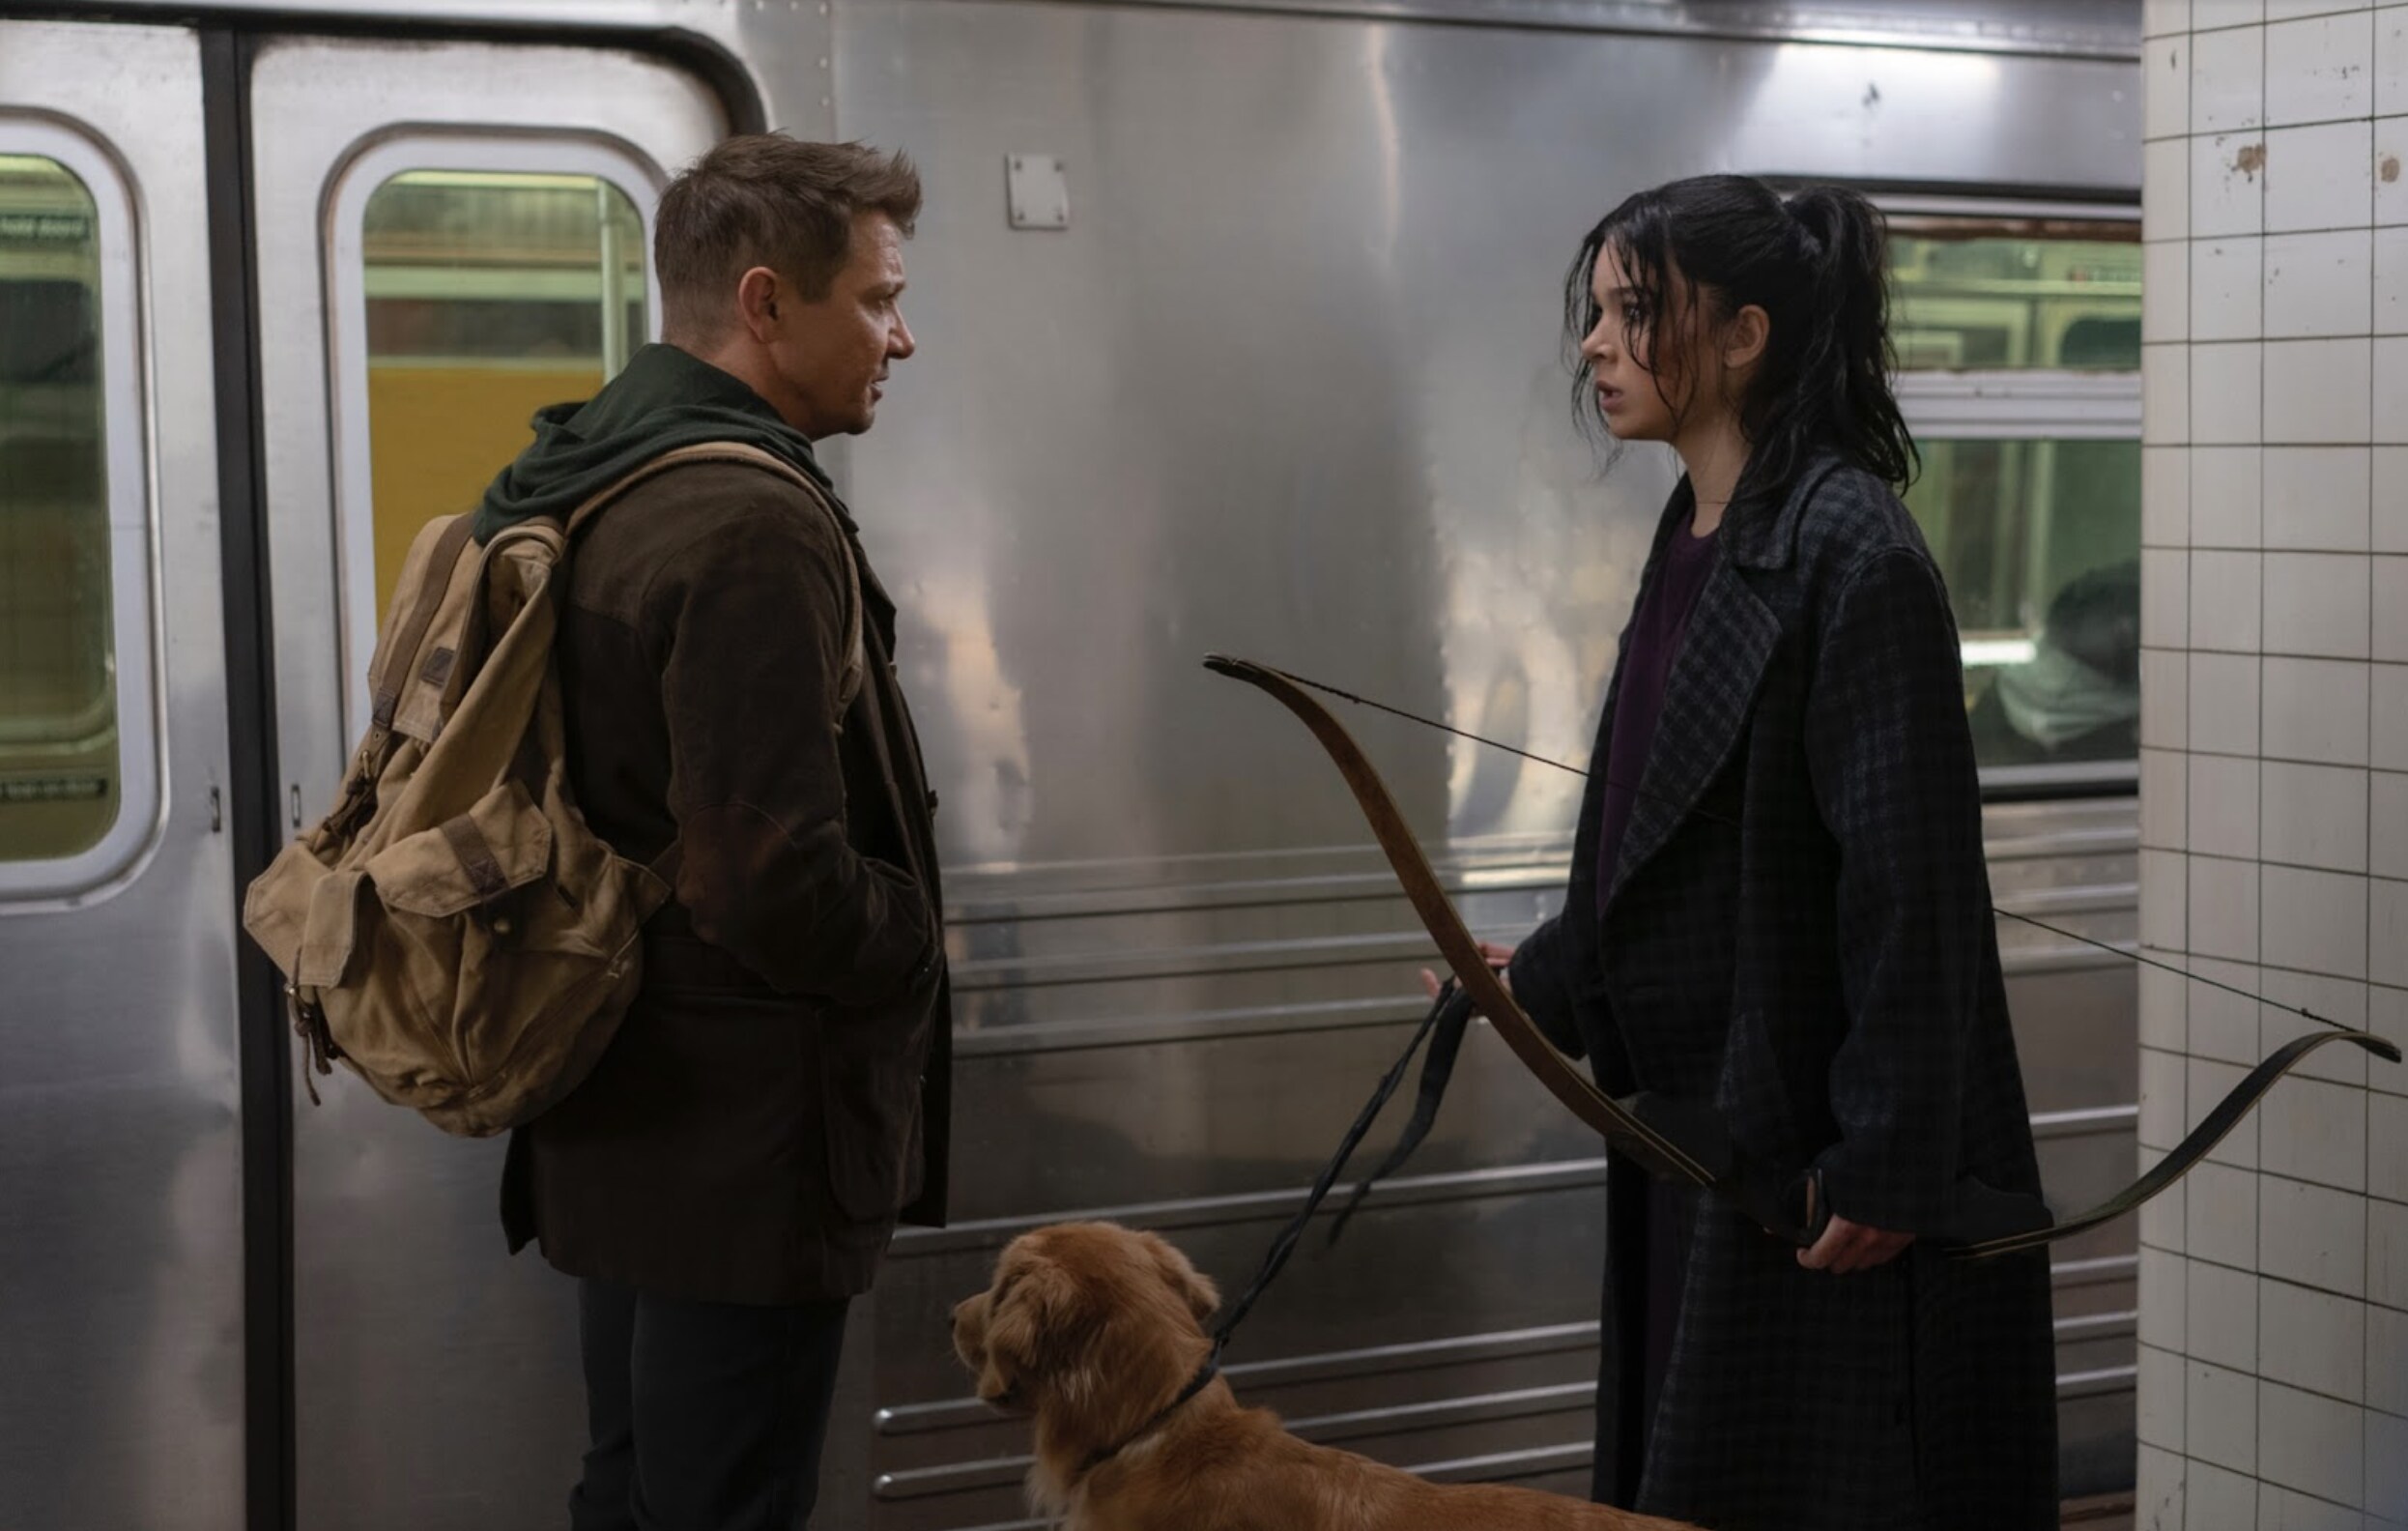 Hawkeye, Kate Bishop, and her dog in the train station in the original series Hawkeye 